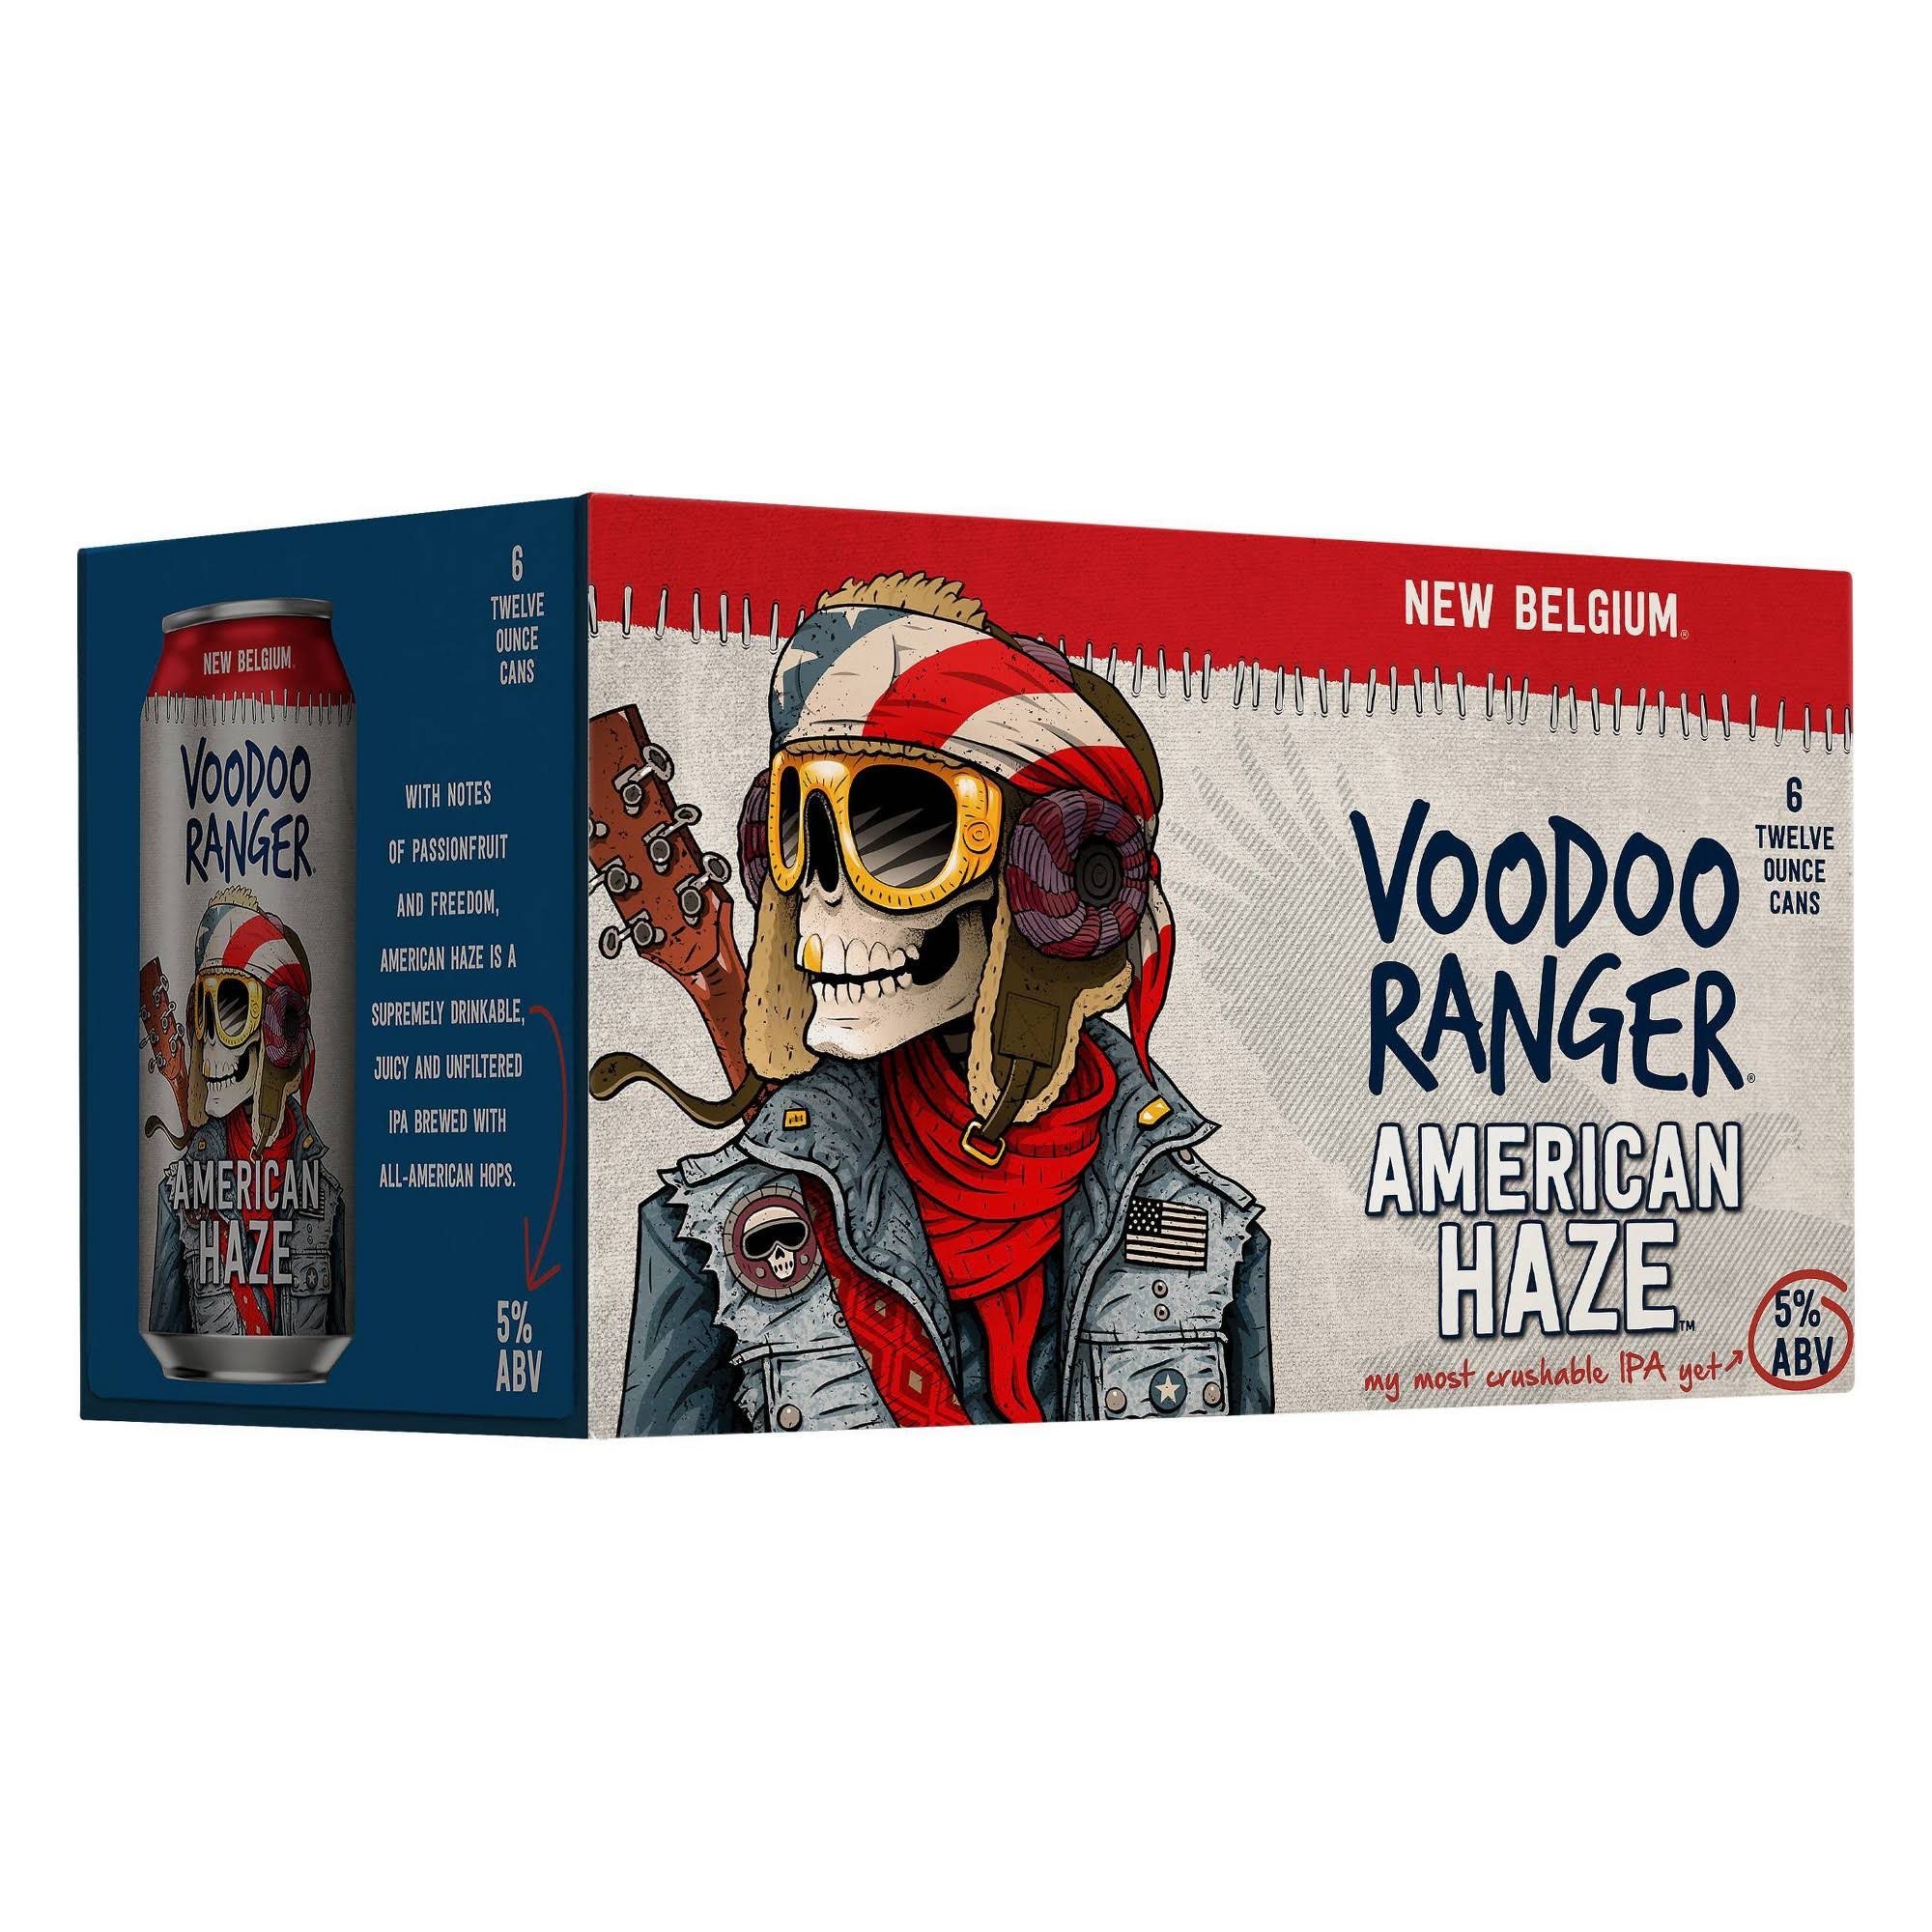 Voodoo Ranger Beer, IPA, American Haze - 6 pack, 12 oz cans